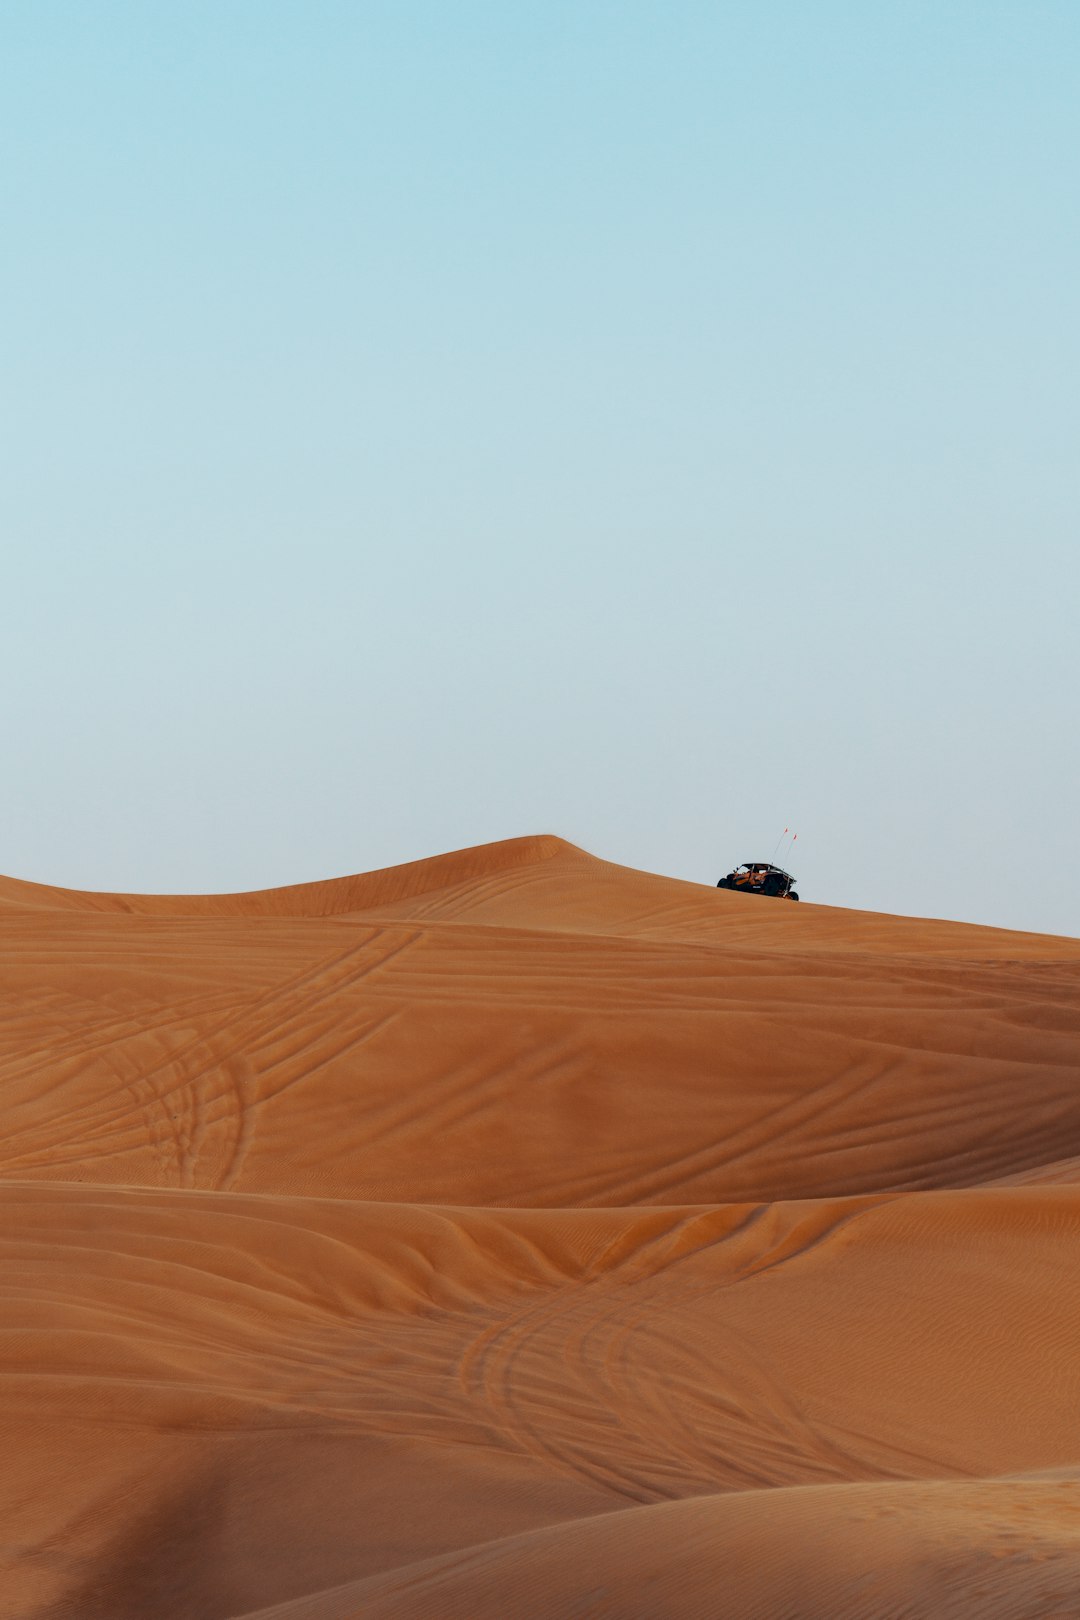 Desert photo spot Dubai Sharjah - United Arab Emirates